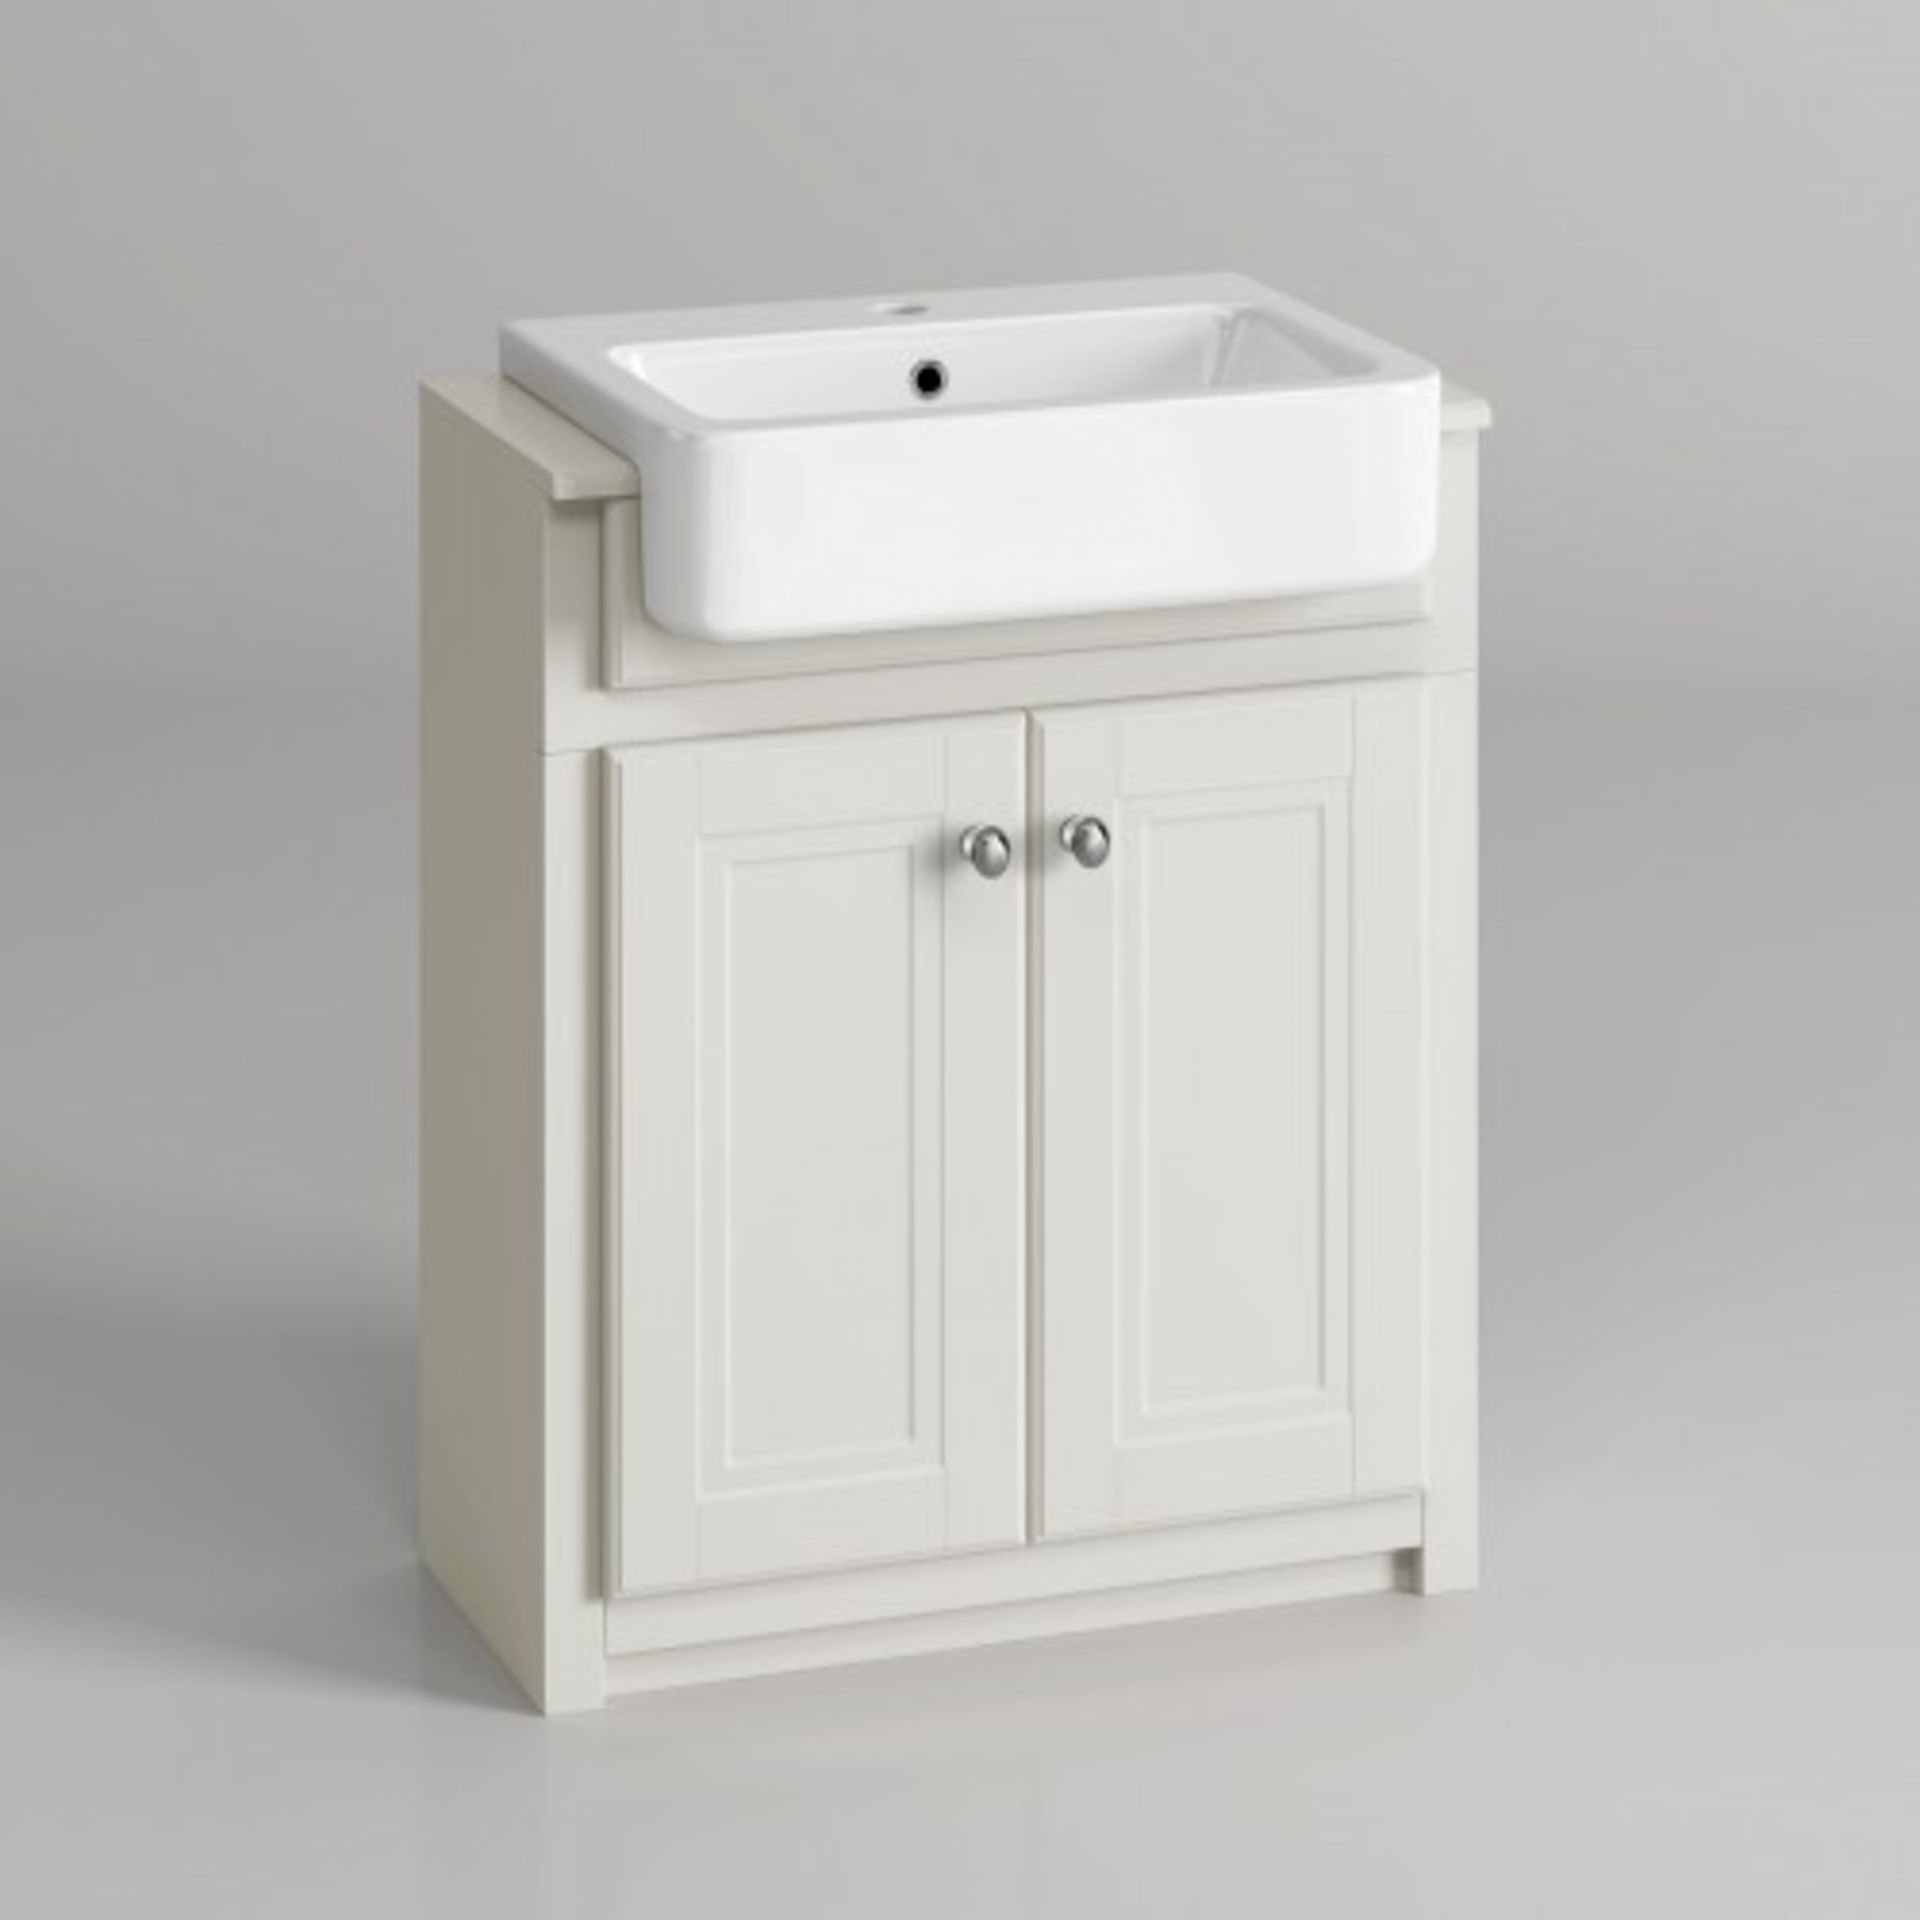 NEW & BOXED 667mm Cambridge Ivory FloorStanding Sink Vanity Unit. RRP £749.99.MF2900.Comes - Image 2 of 3